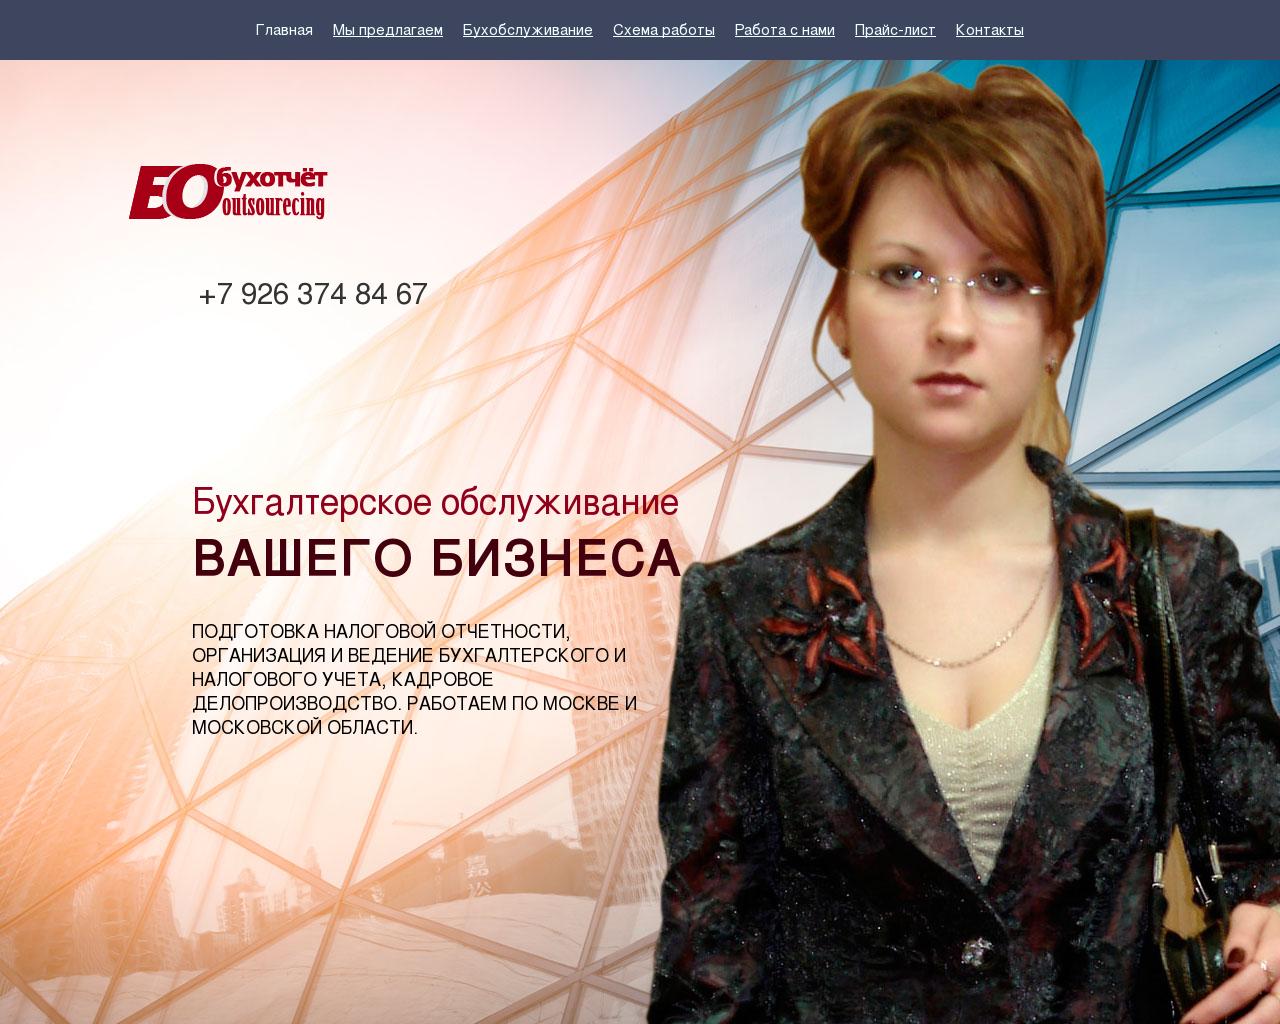 Изображение сайта buxotchot.ru в разрешении 1280x1024